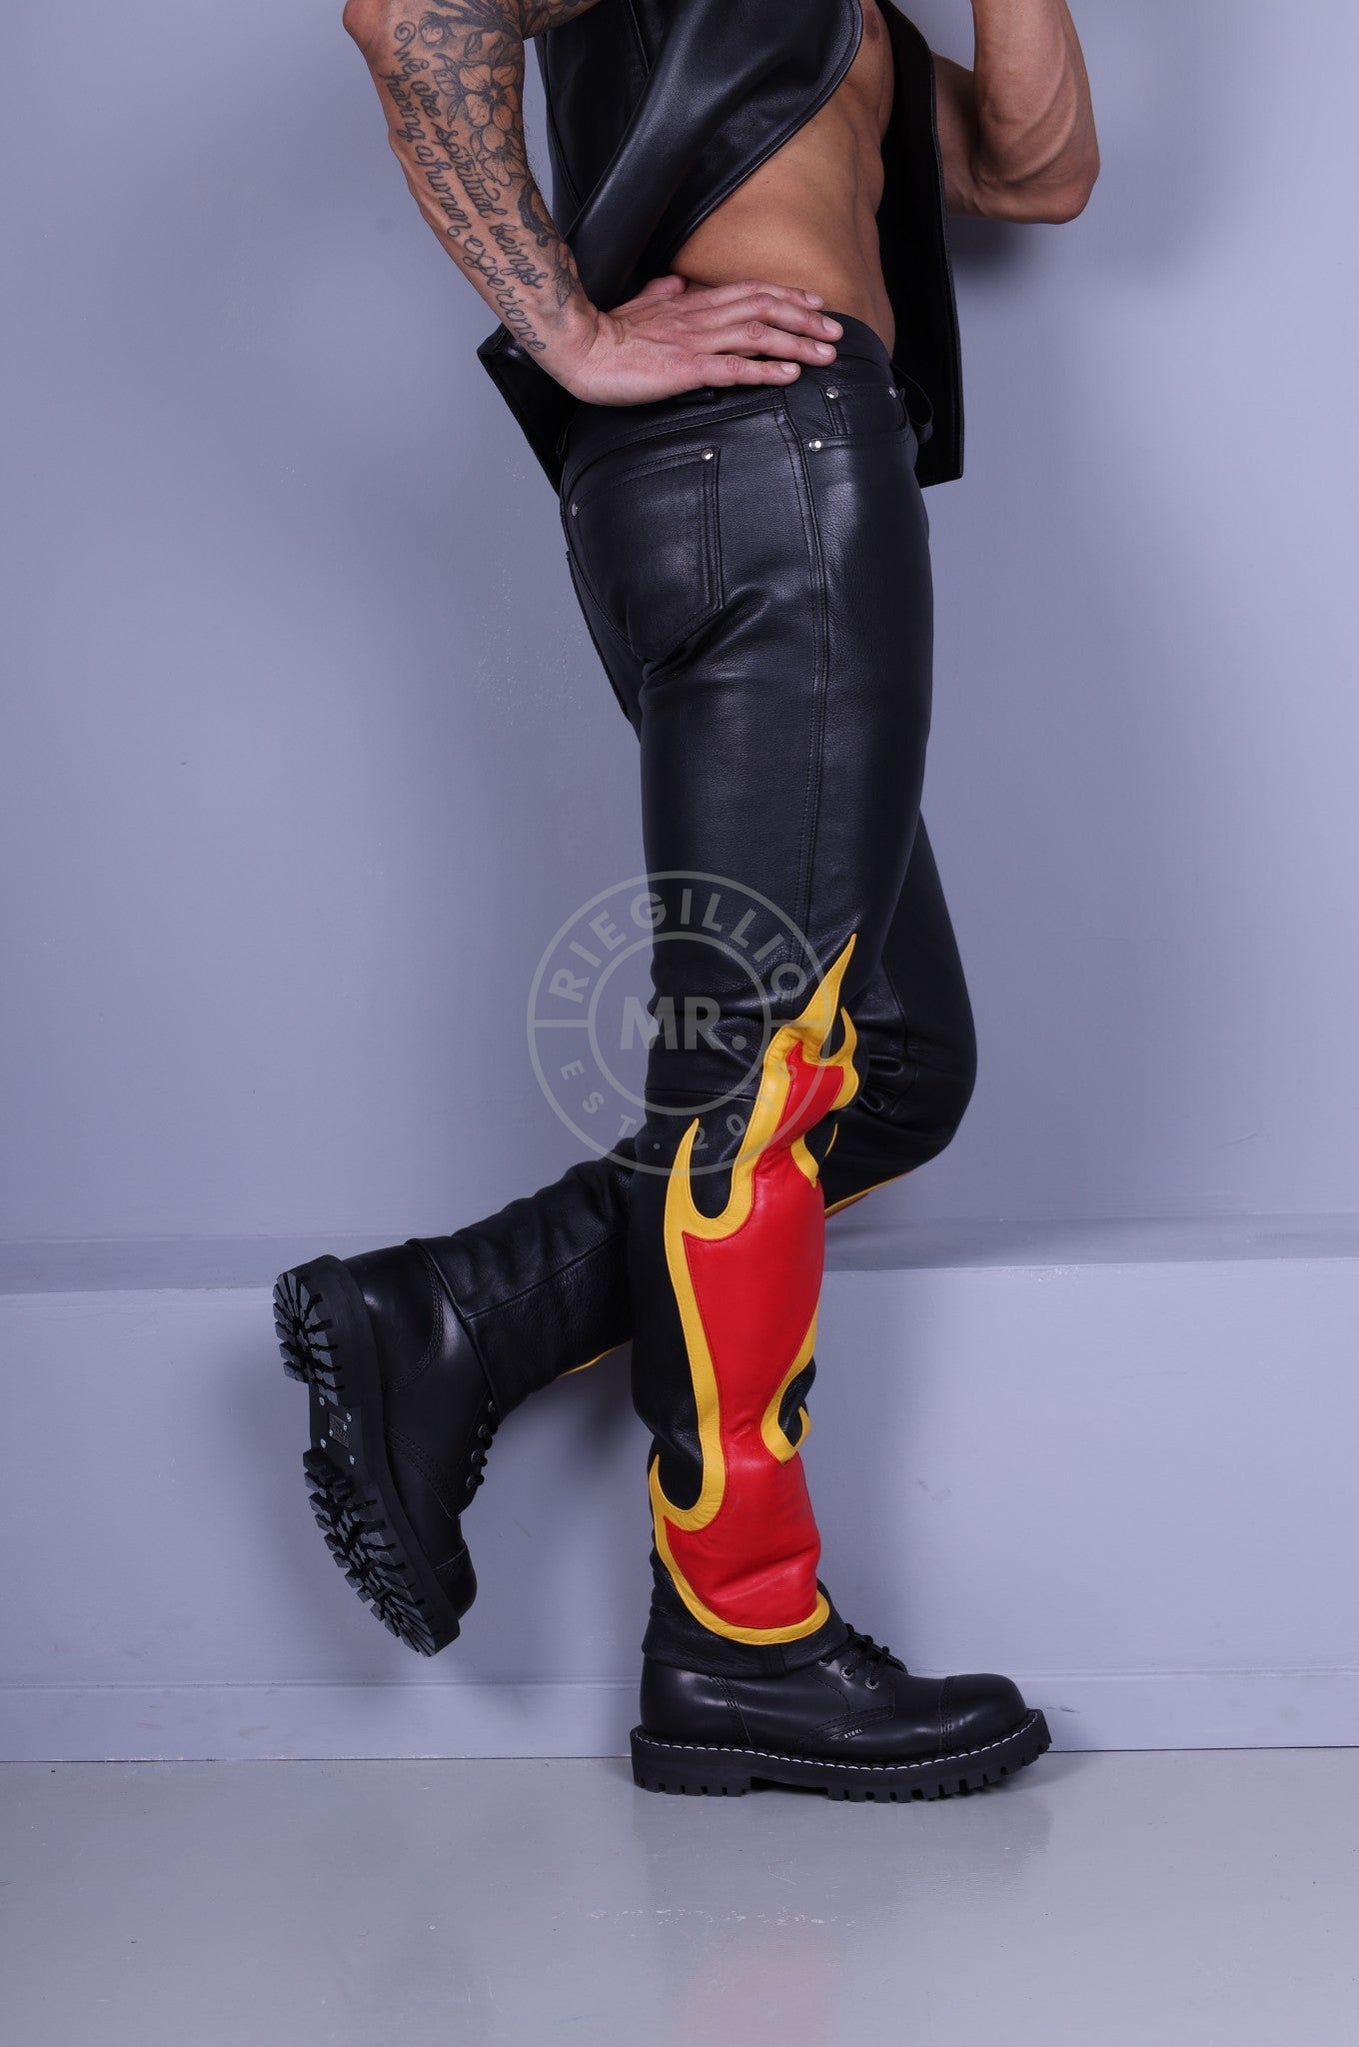 Flame Leather Pants at MR. Riegillio